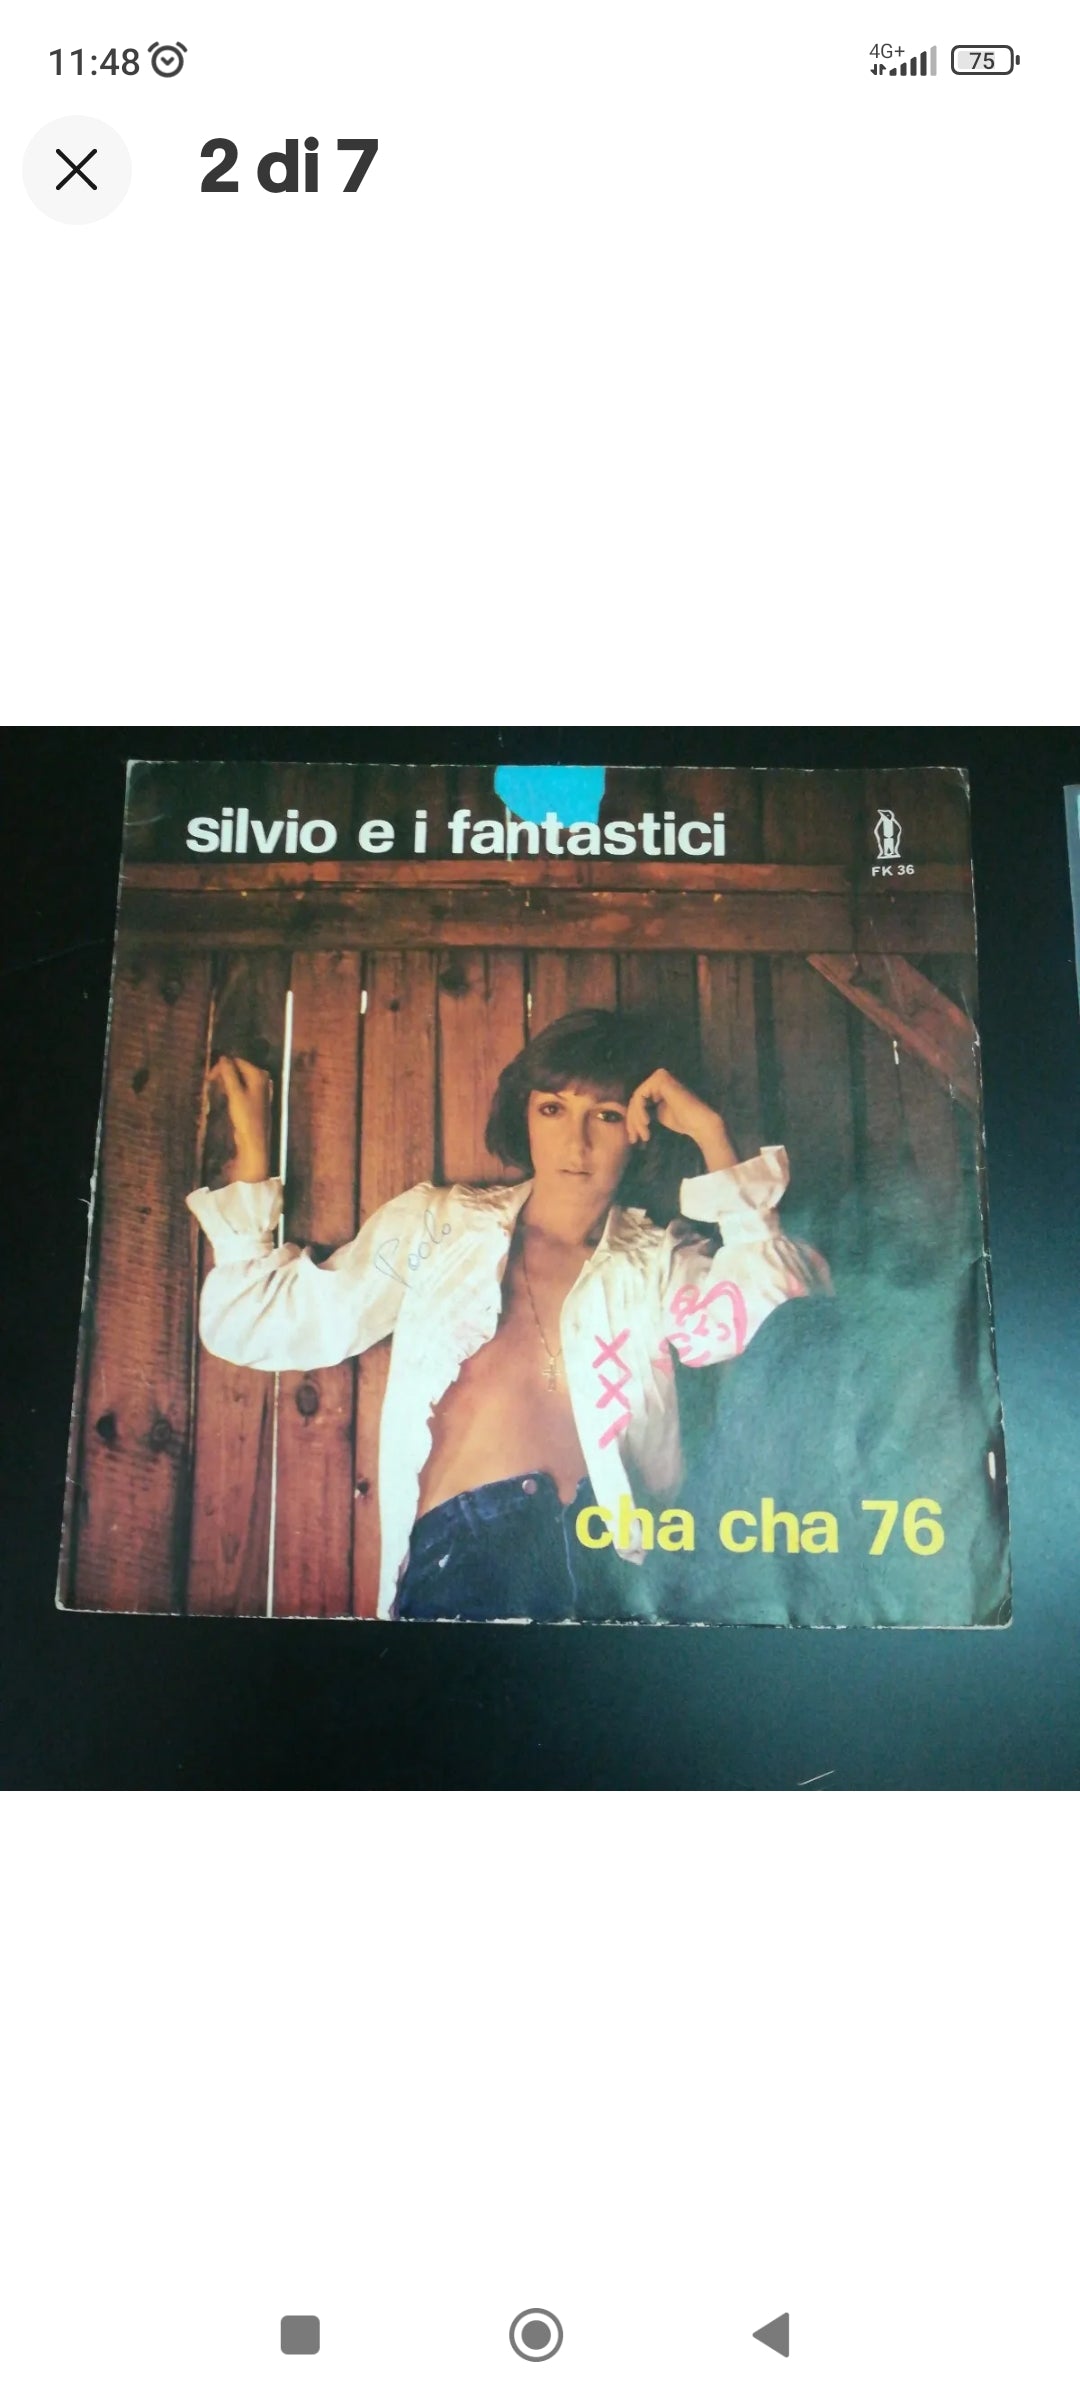 45 rpm "Cha Cha 76 / Put Music in Jeans" Silvio EI Fantastici